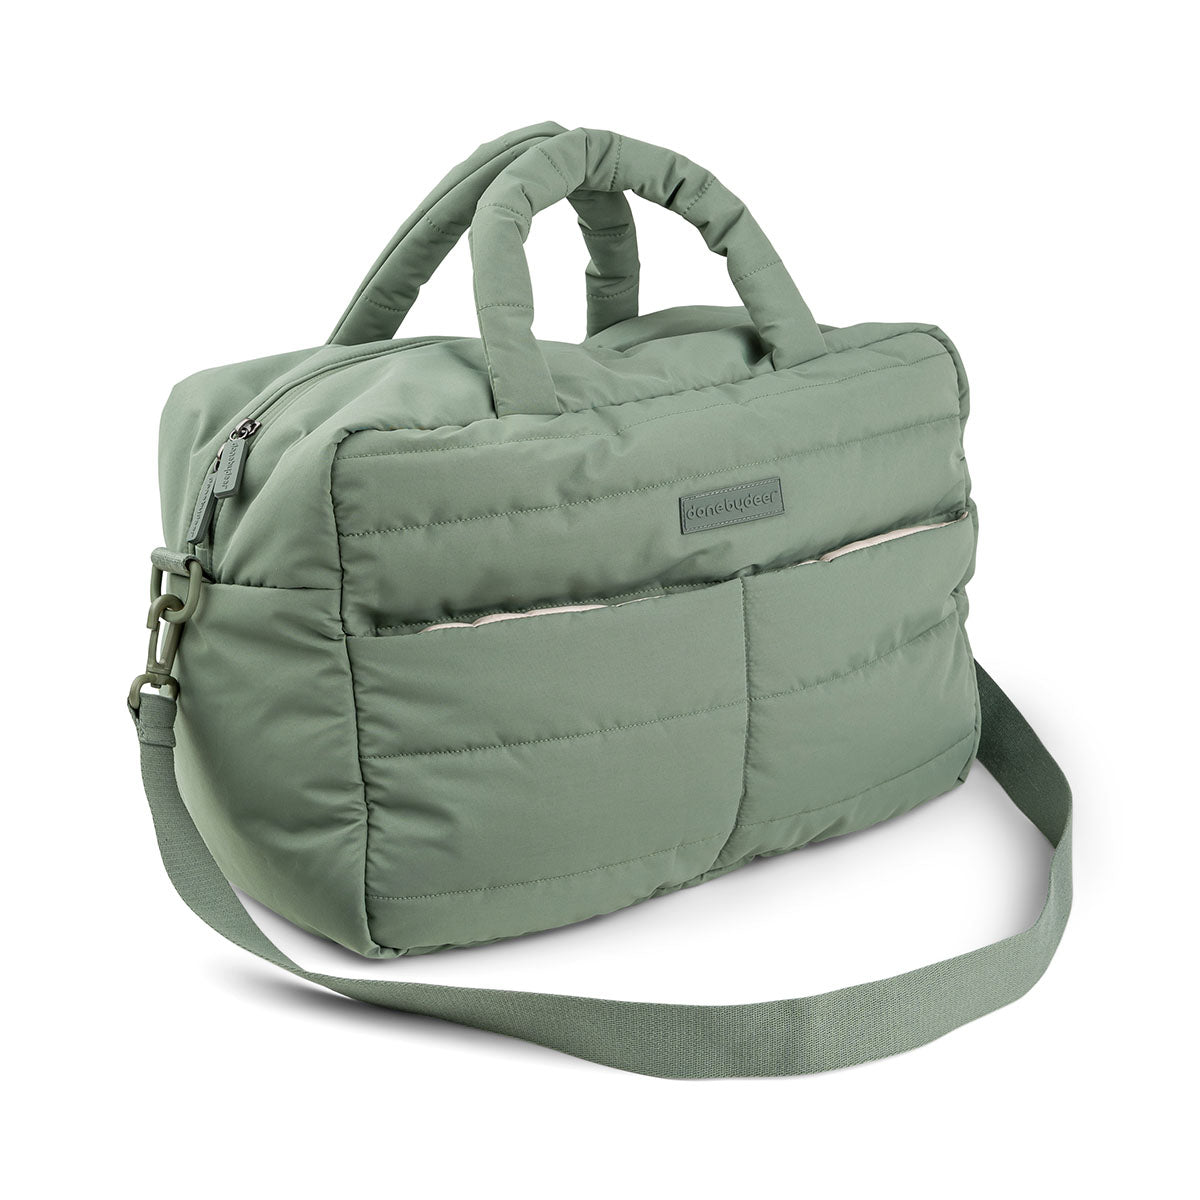 Modern nursery bag for MaxiCosi stroller